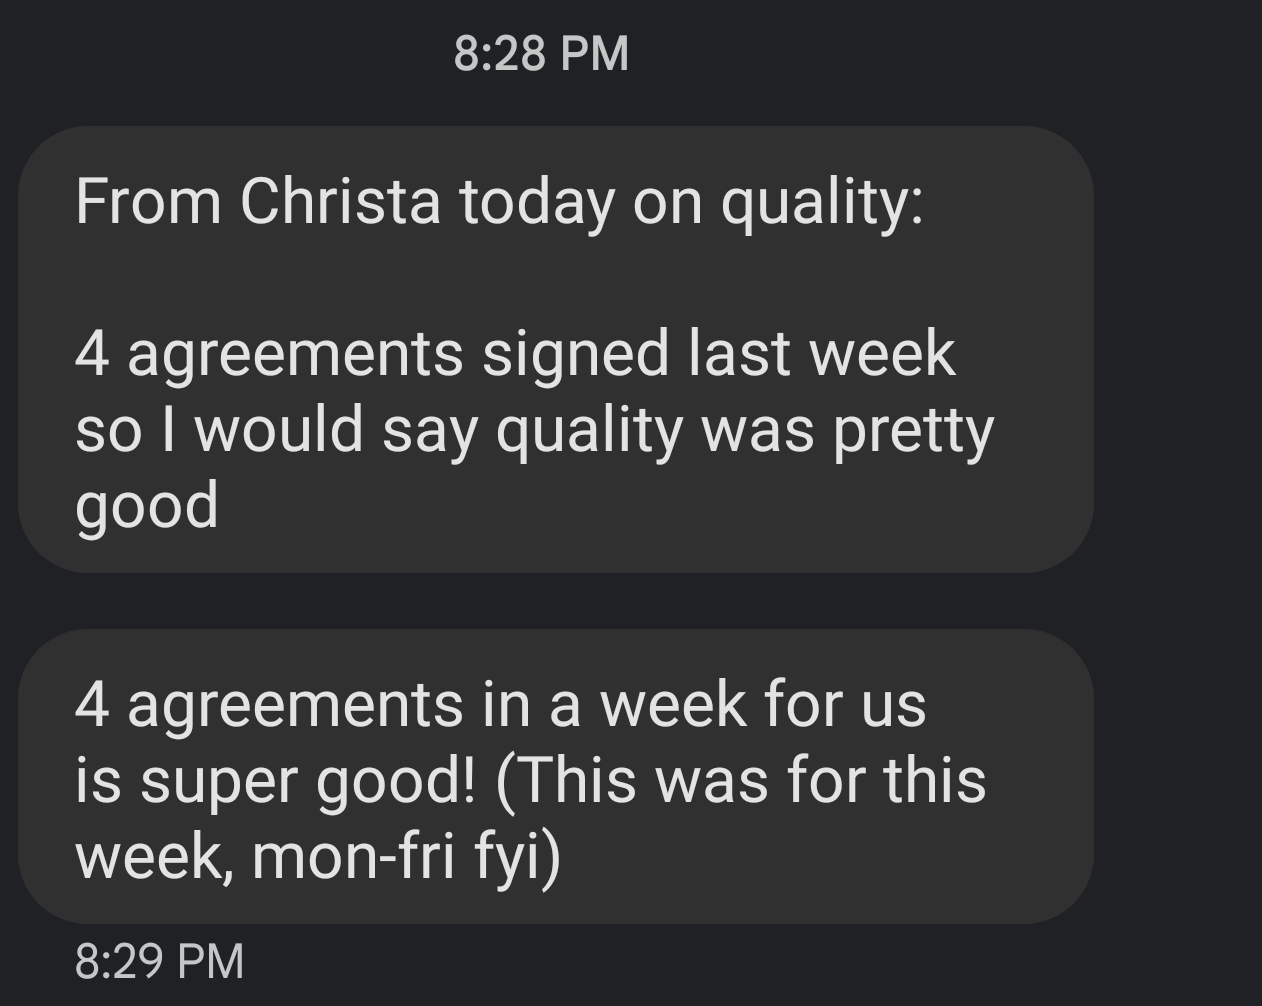 4 agreements in a week